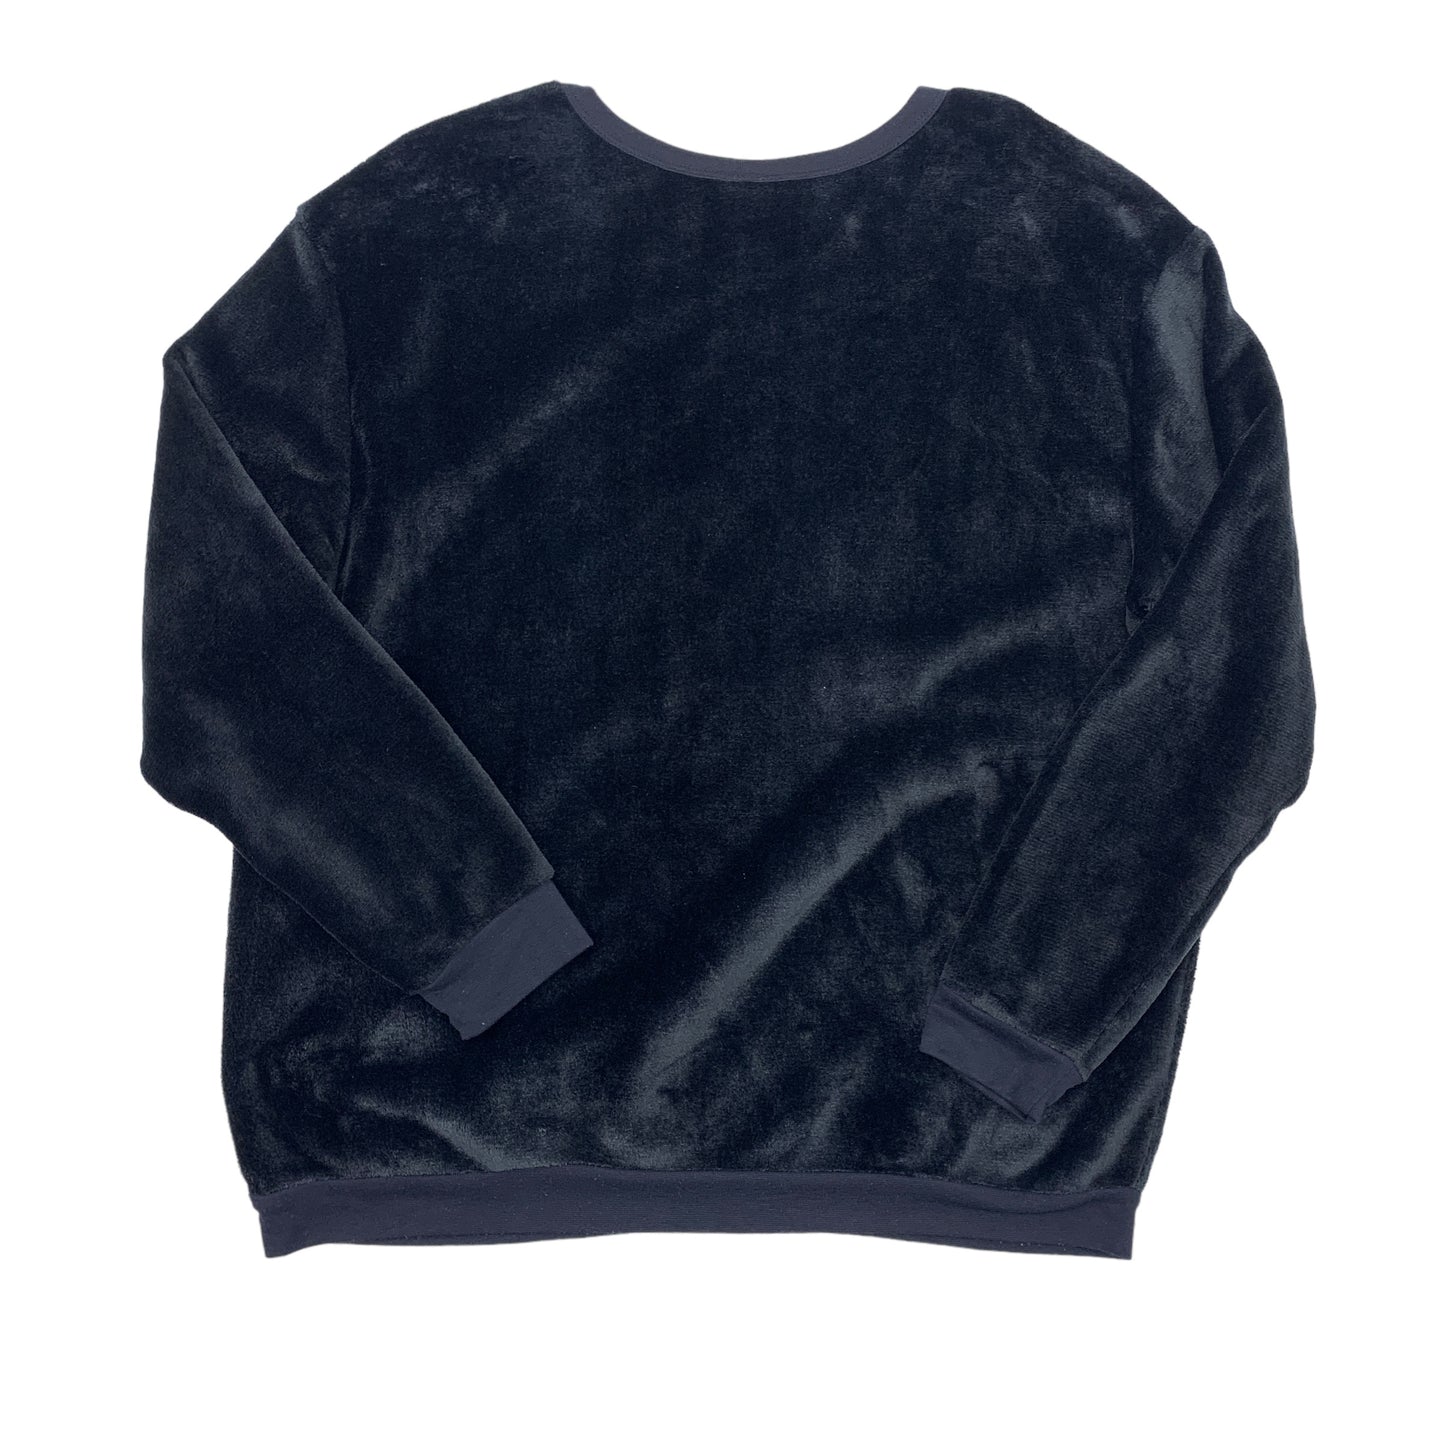 Sweatshirt Crewneck By Disney Store  Size: 1x